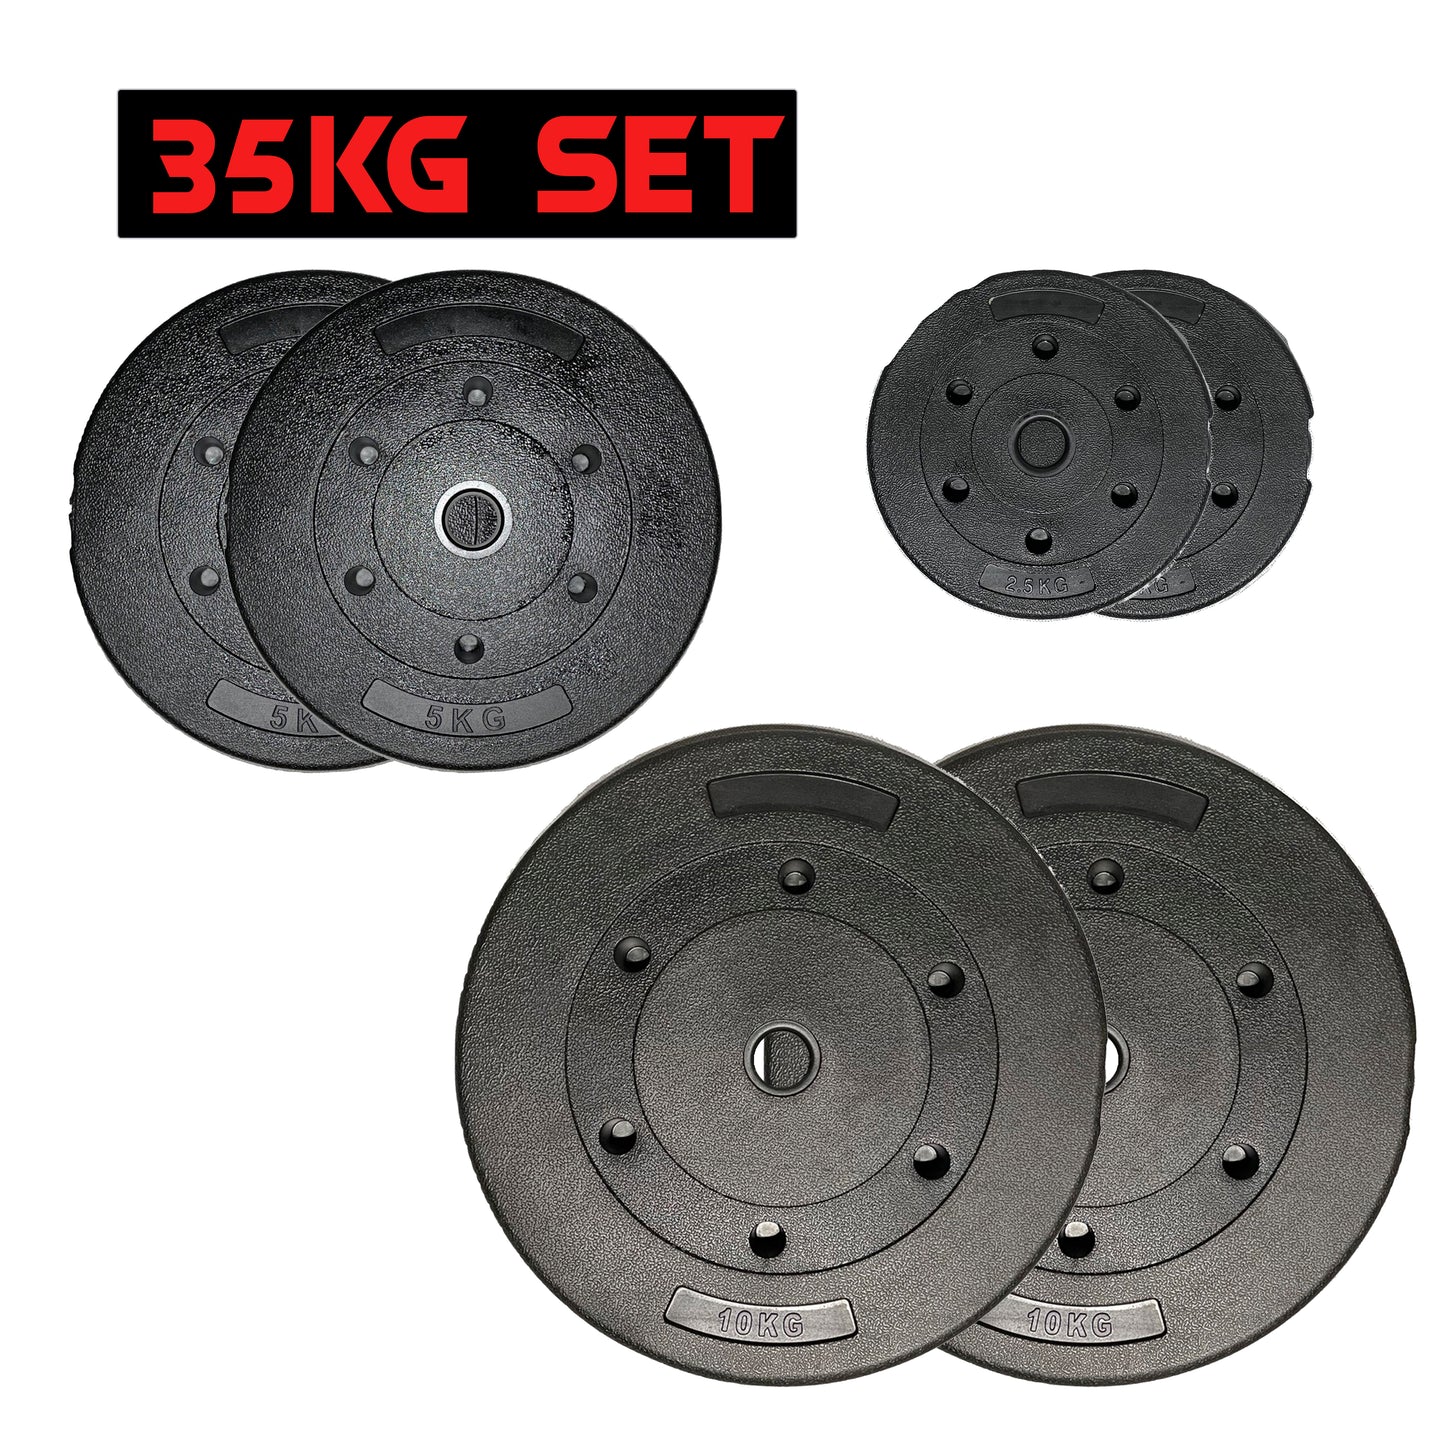 Exersci® 1" Vinyl Cement Weight Plates